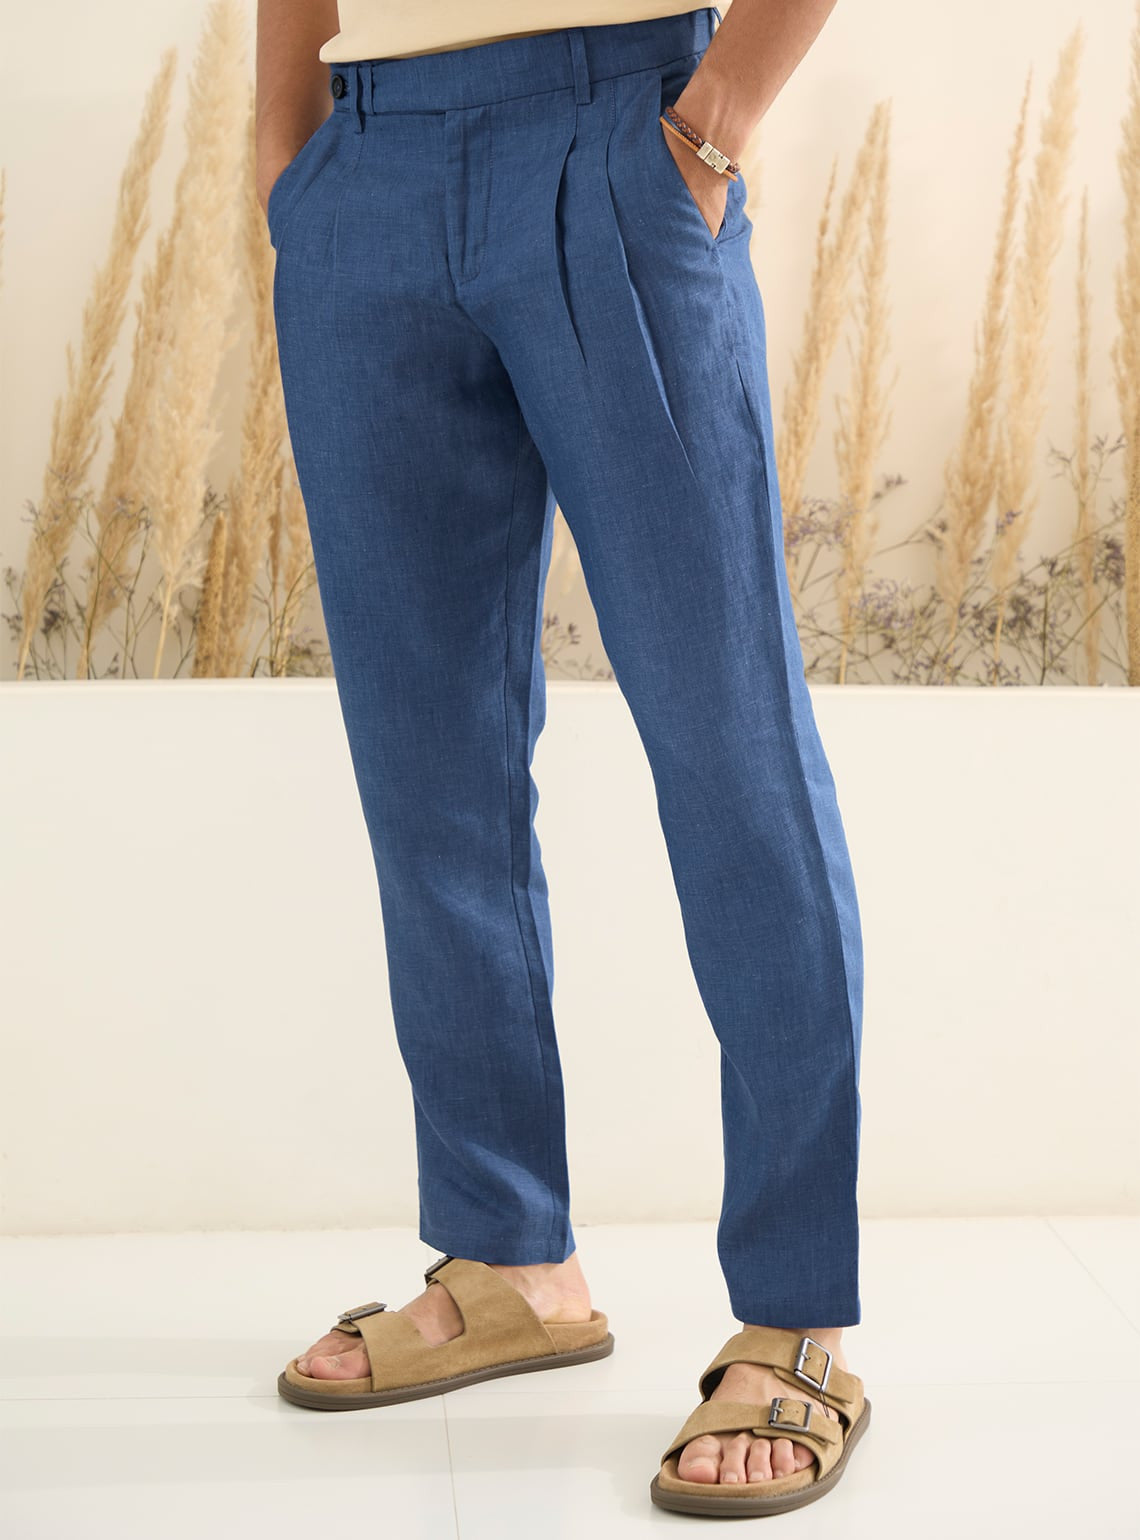 Buy Dusk Blue Linen Pants  Casual Blue Chambrays Pants for Men Online   Andamen